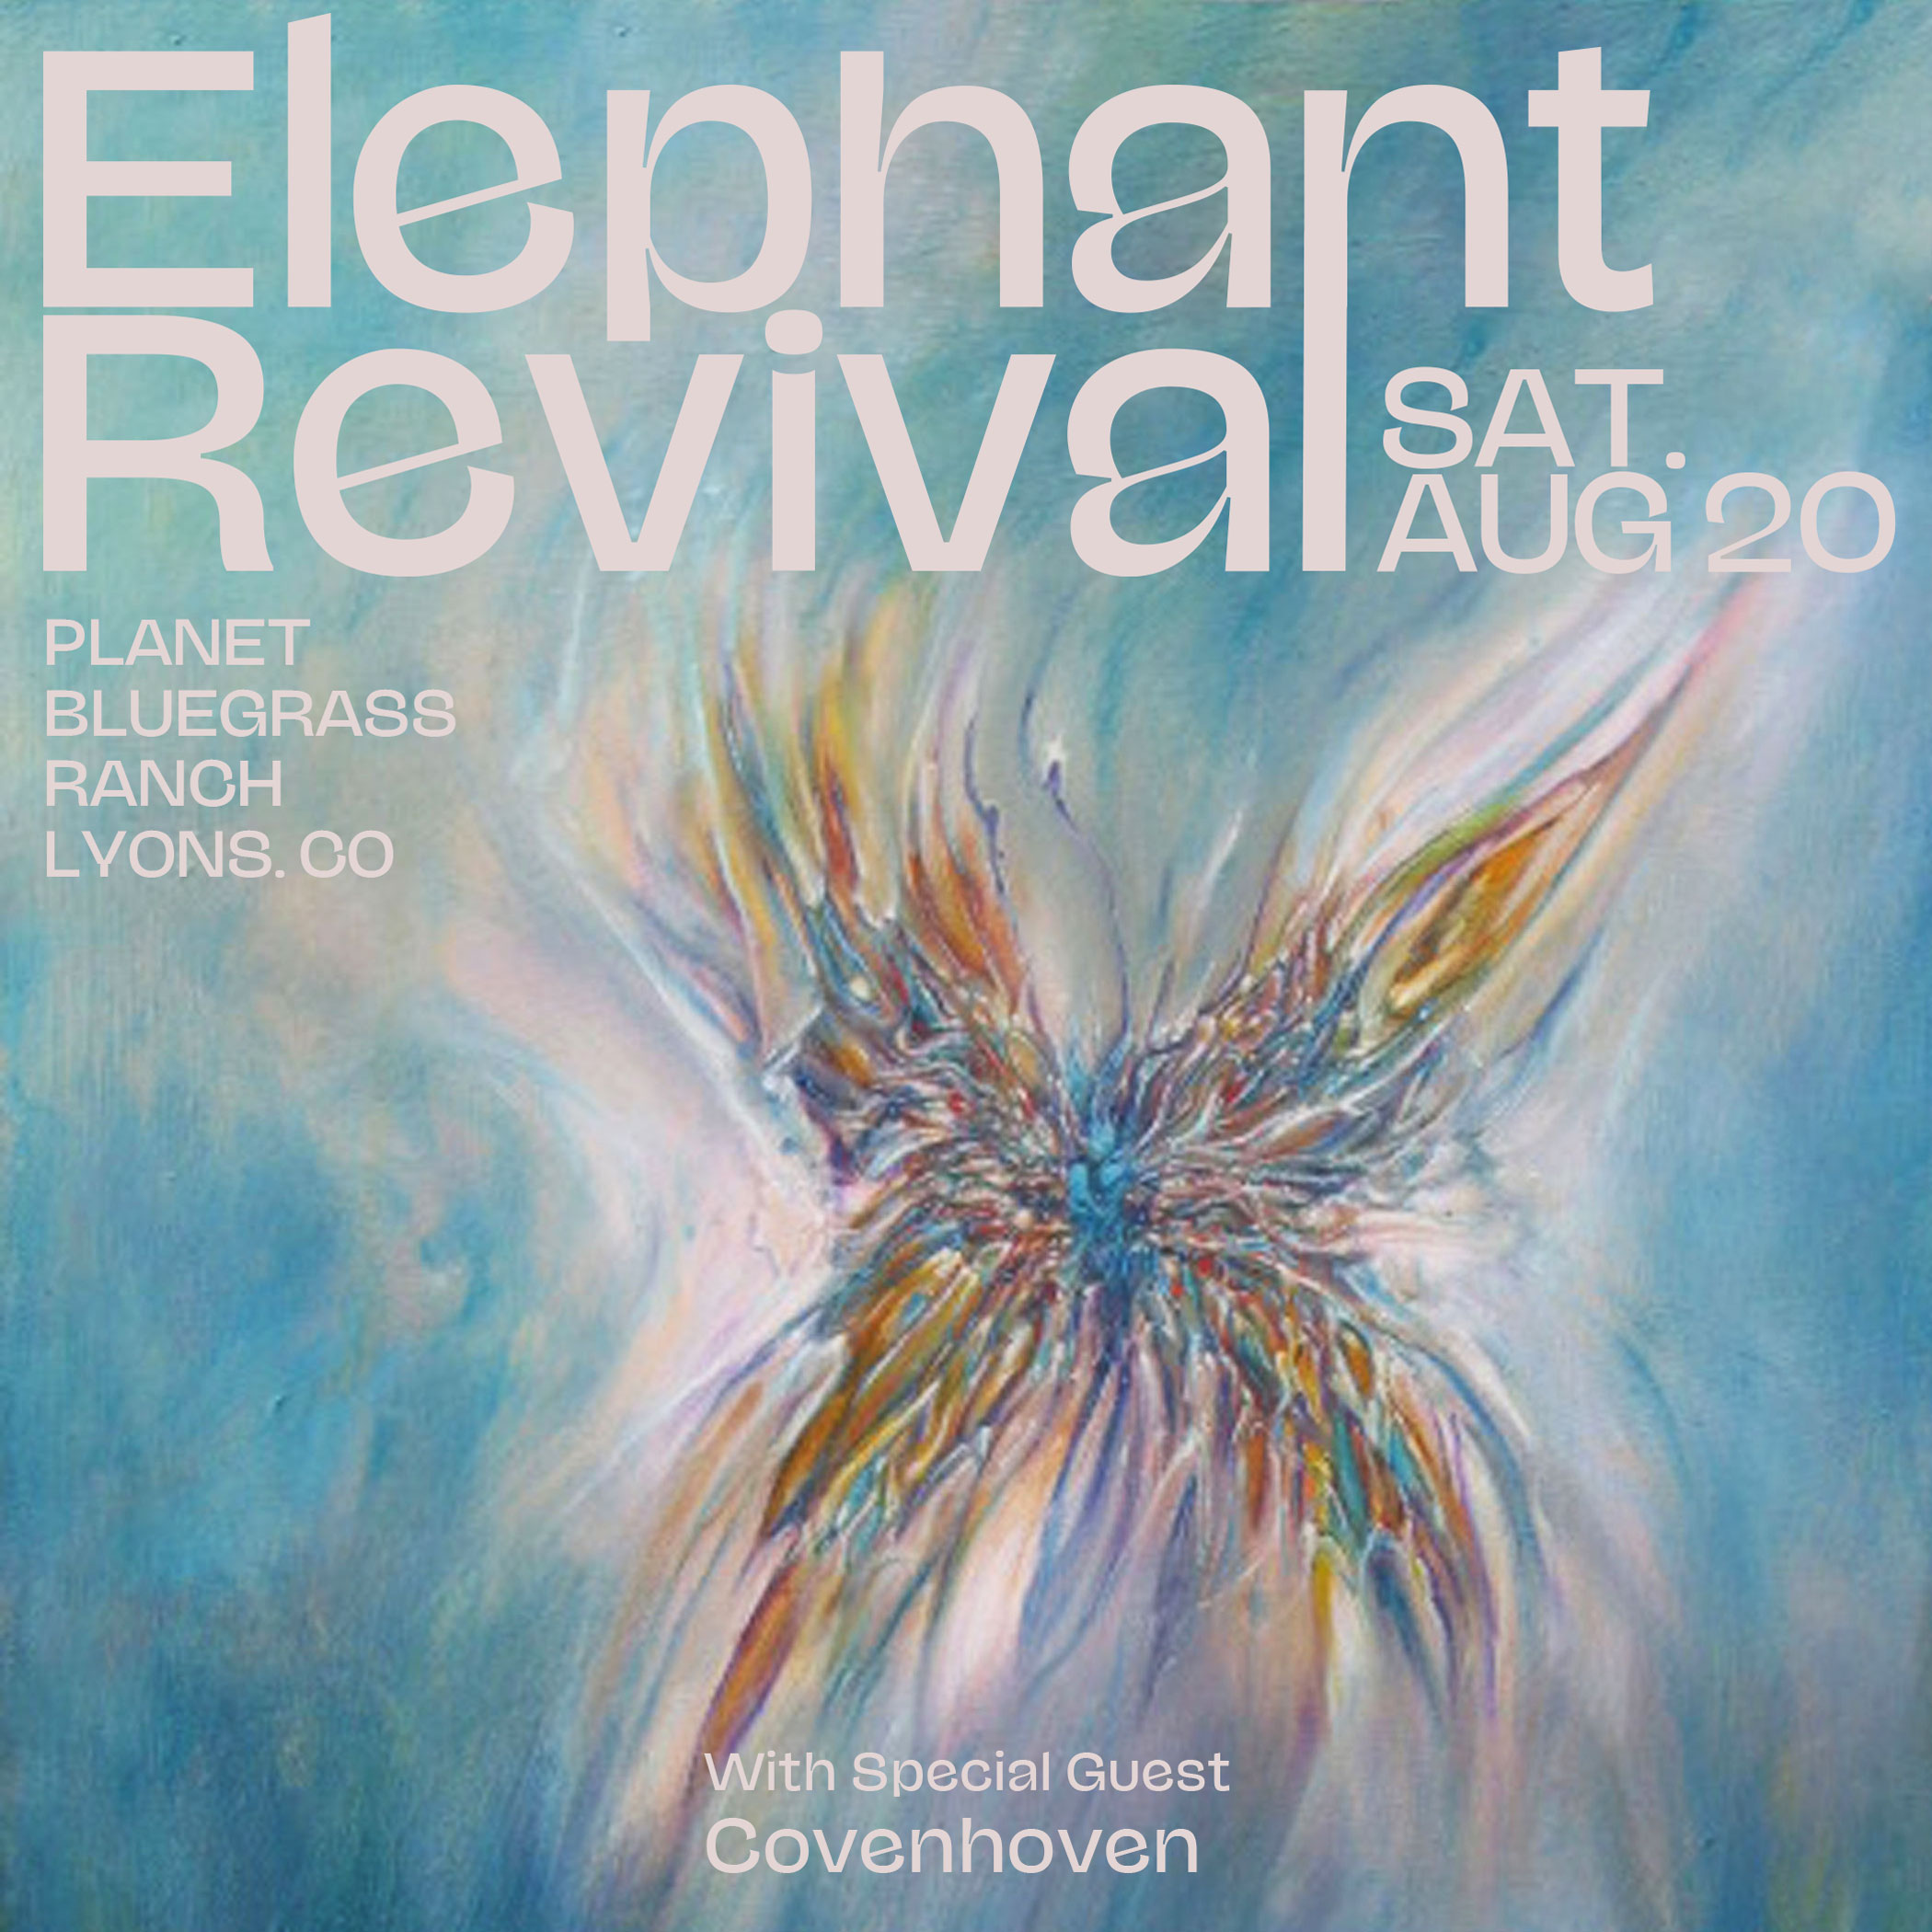 Elephant Revival, Magazine 303, Planet Bluegrass Ranch, 